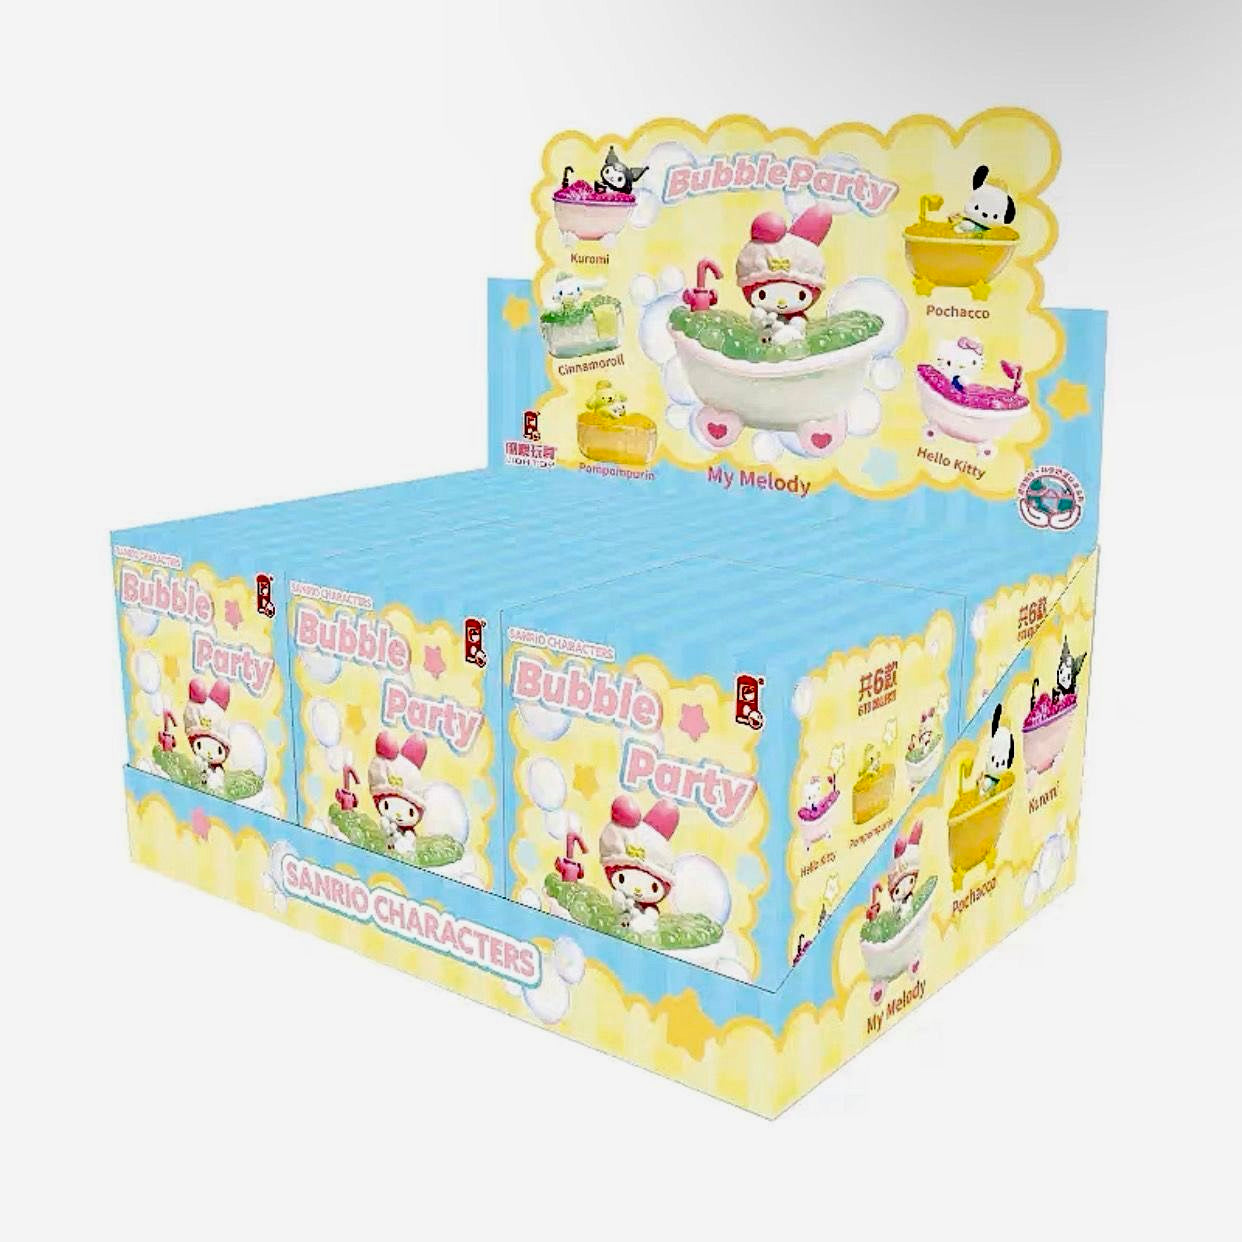 Sanrio Bubble Party Blind Box